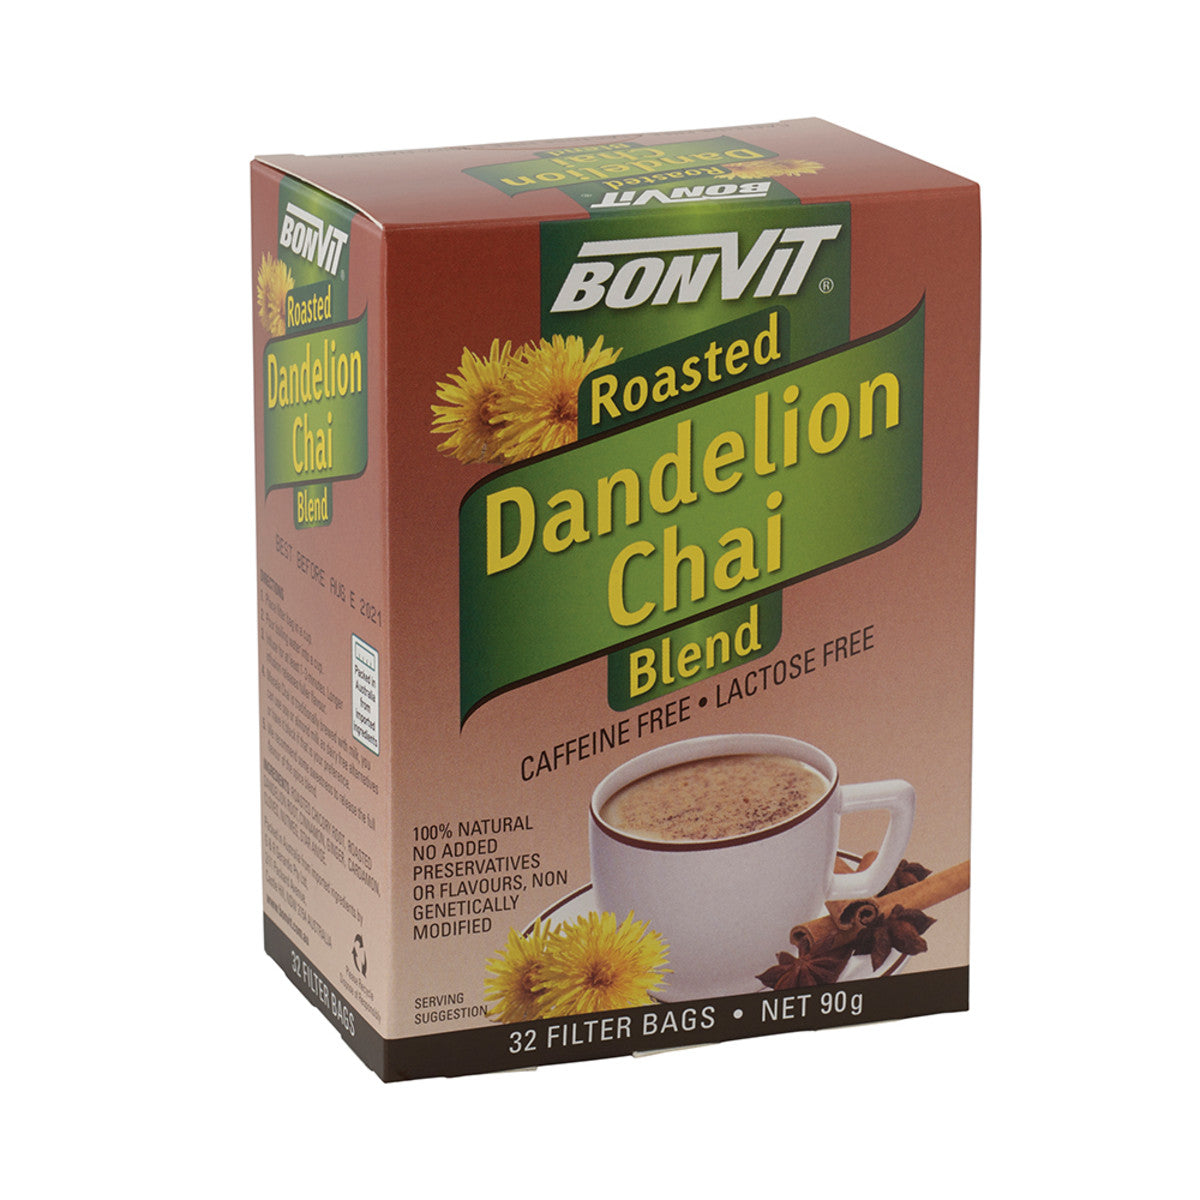 Bonvit Roasted Dandelion Chai Blend Tea 32 Filter Bags, Caffeine Free